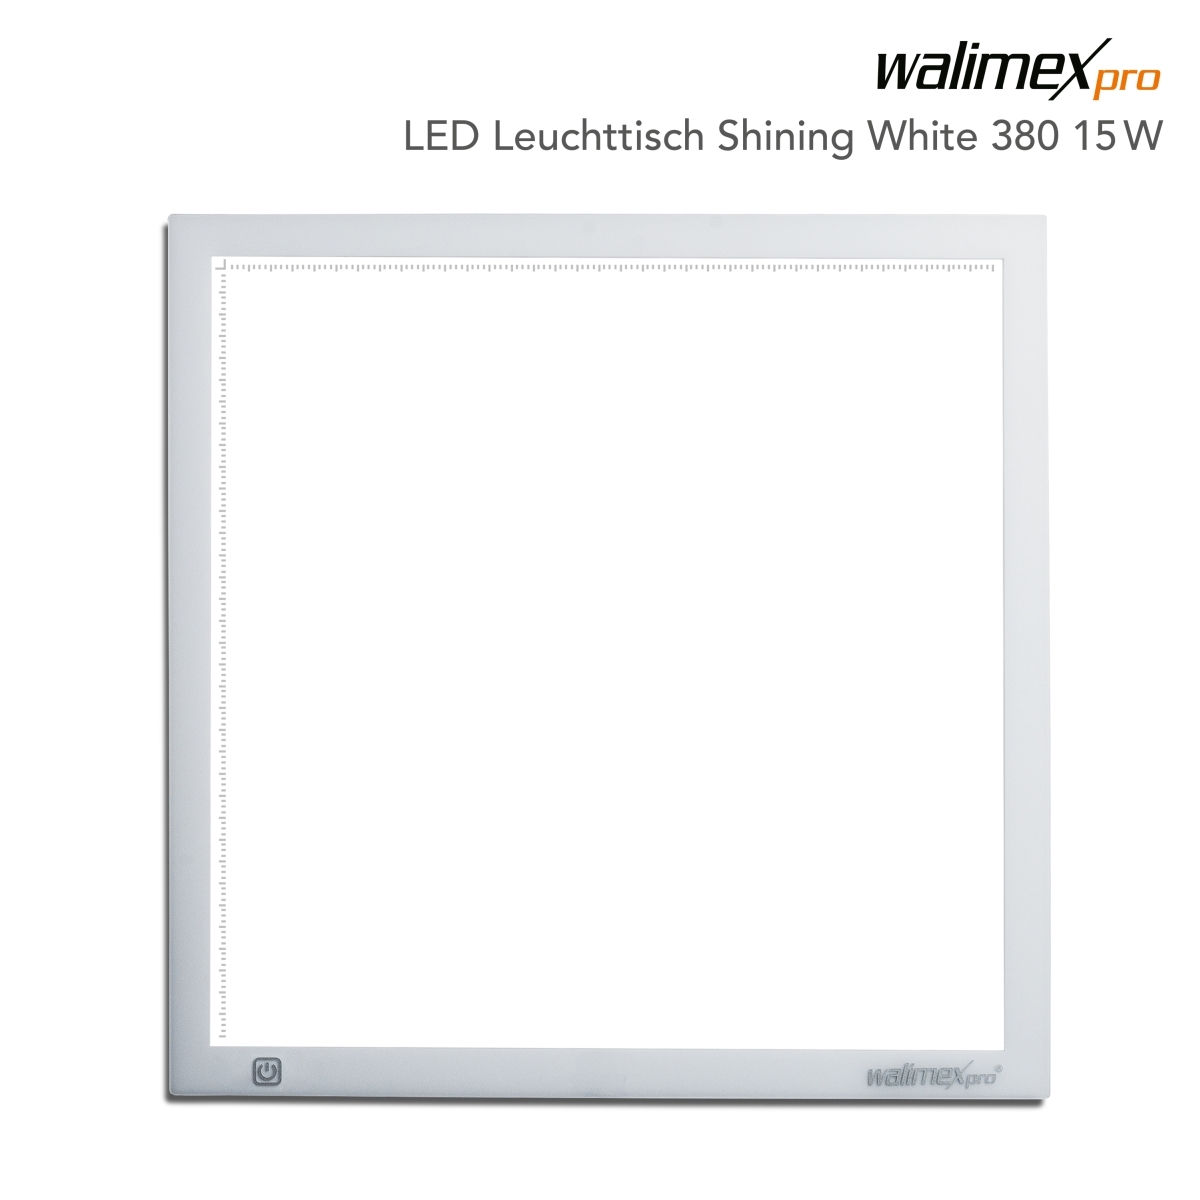 Walimex pro LED Leuchttisch Shining White 380 15W